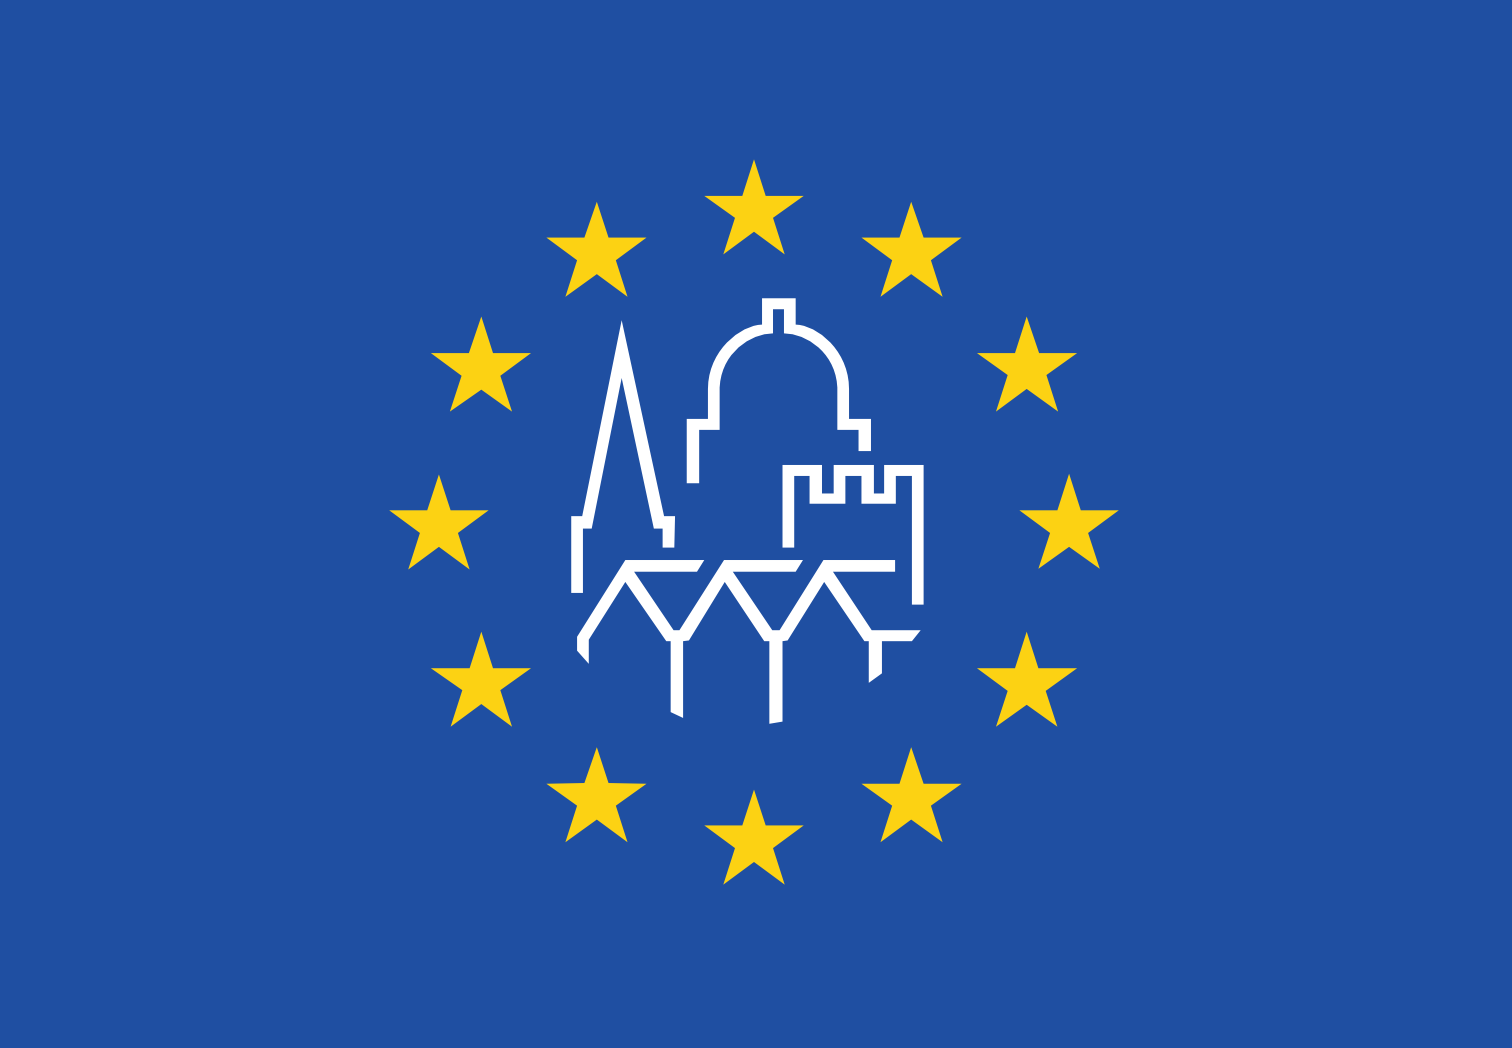 european-heritage-days-logo